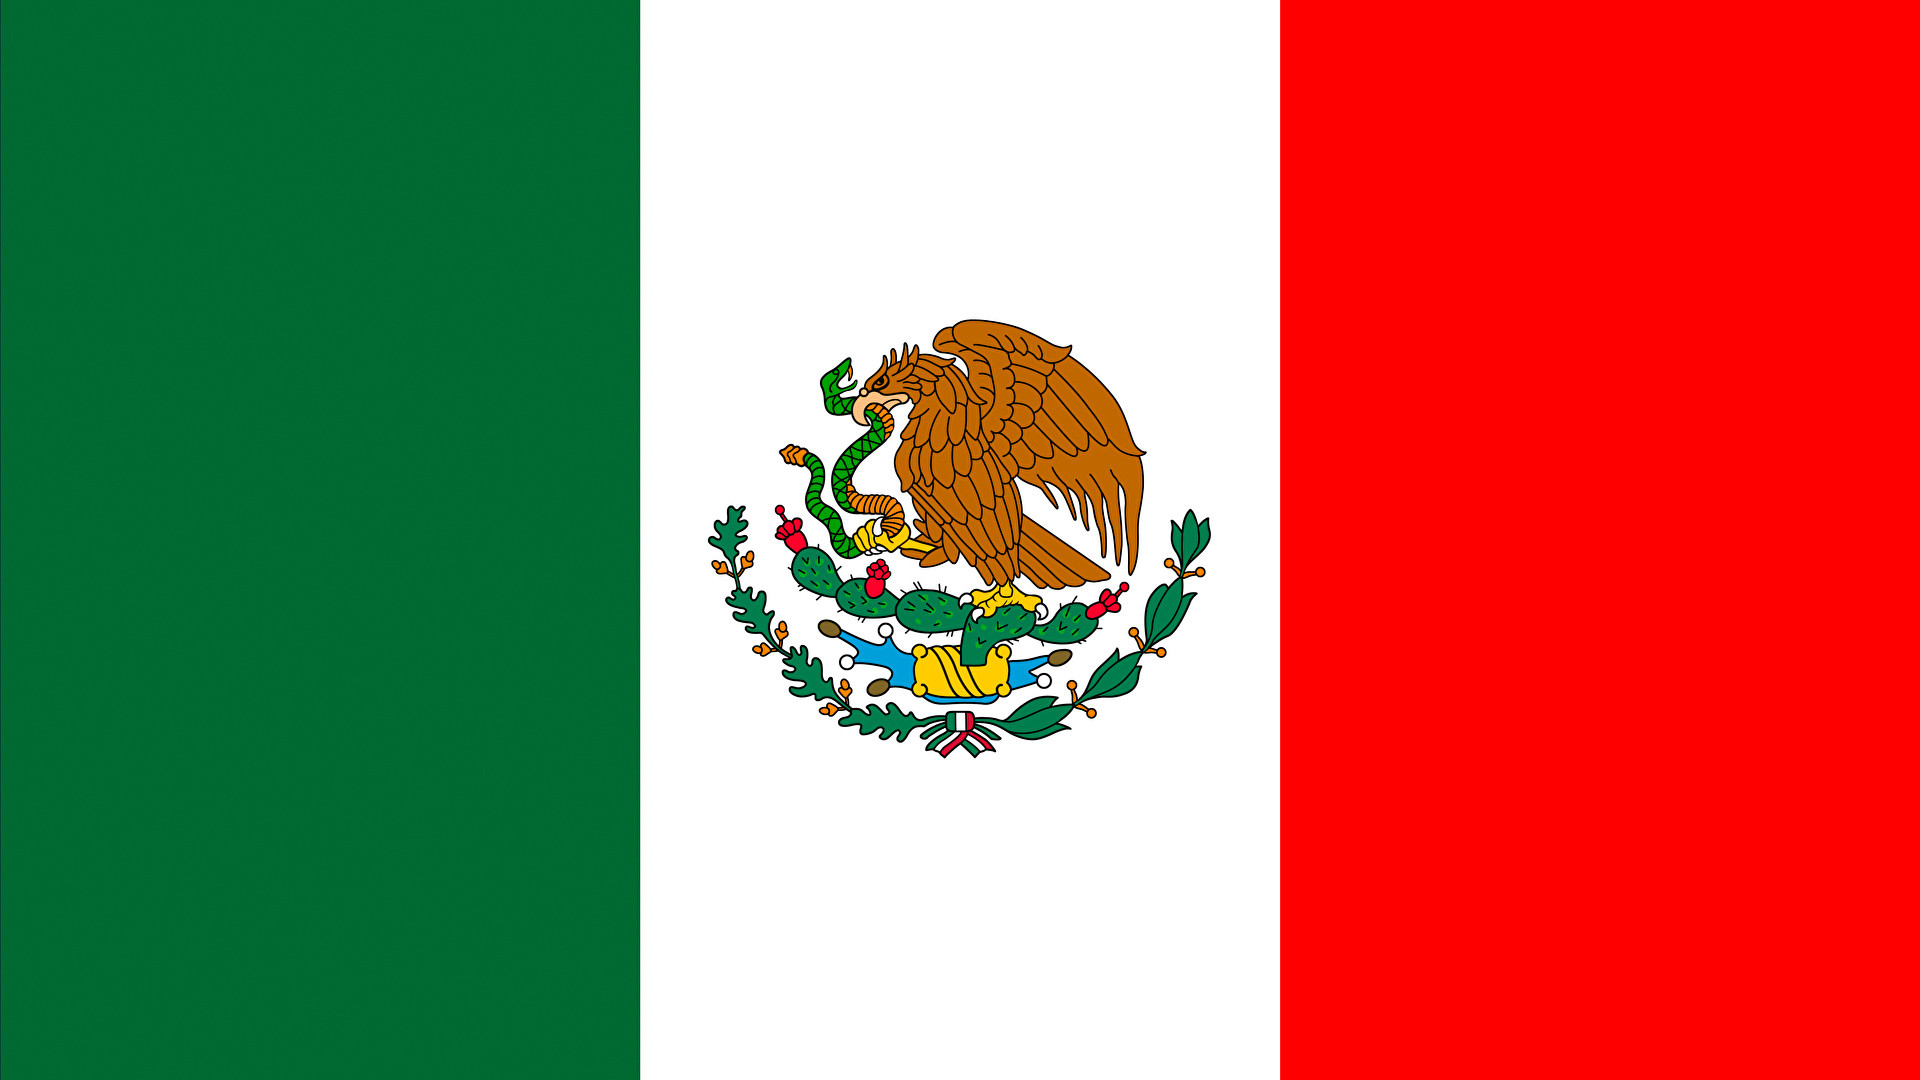 1920x1080 ... Mexican Flag Wallpaper iPhone 6 - WallpaperSafari ...